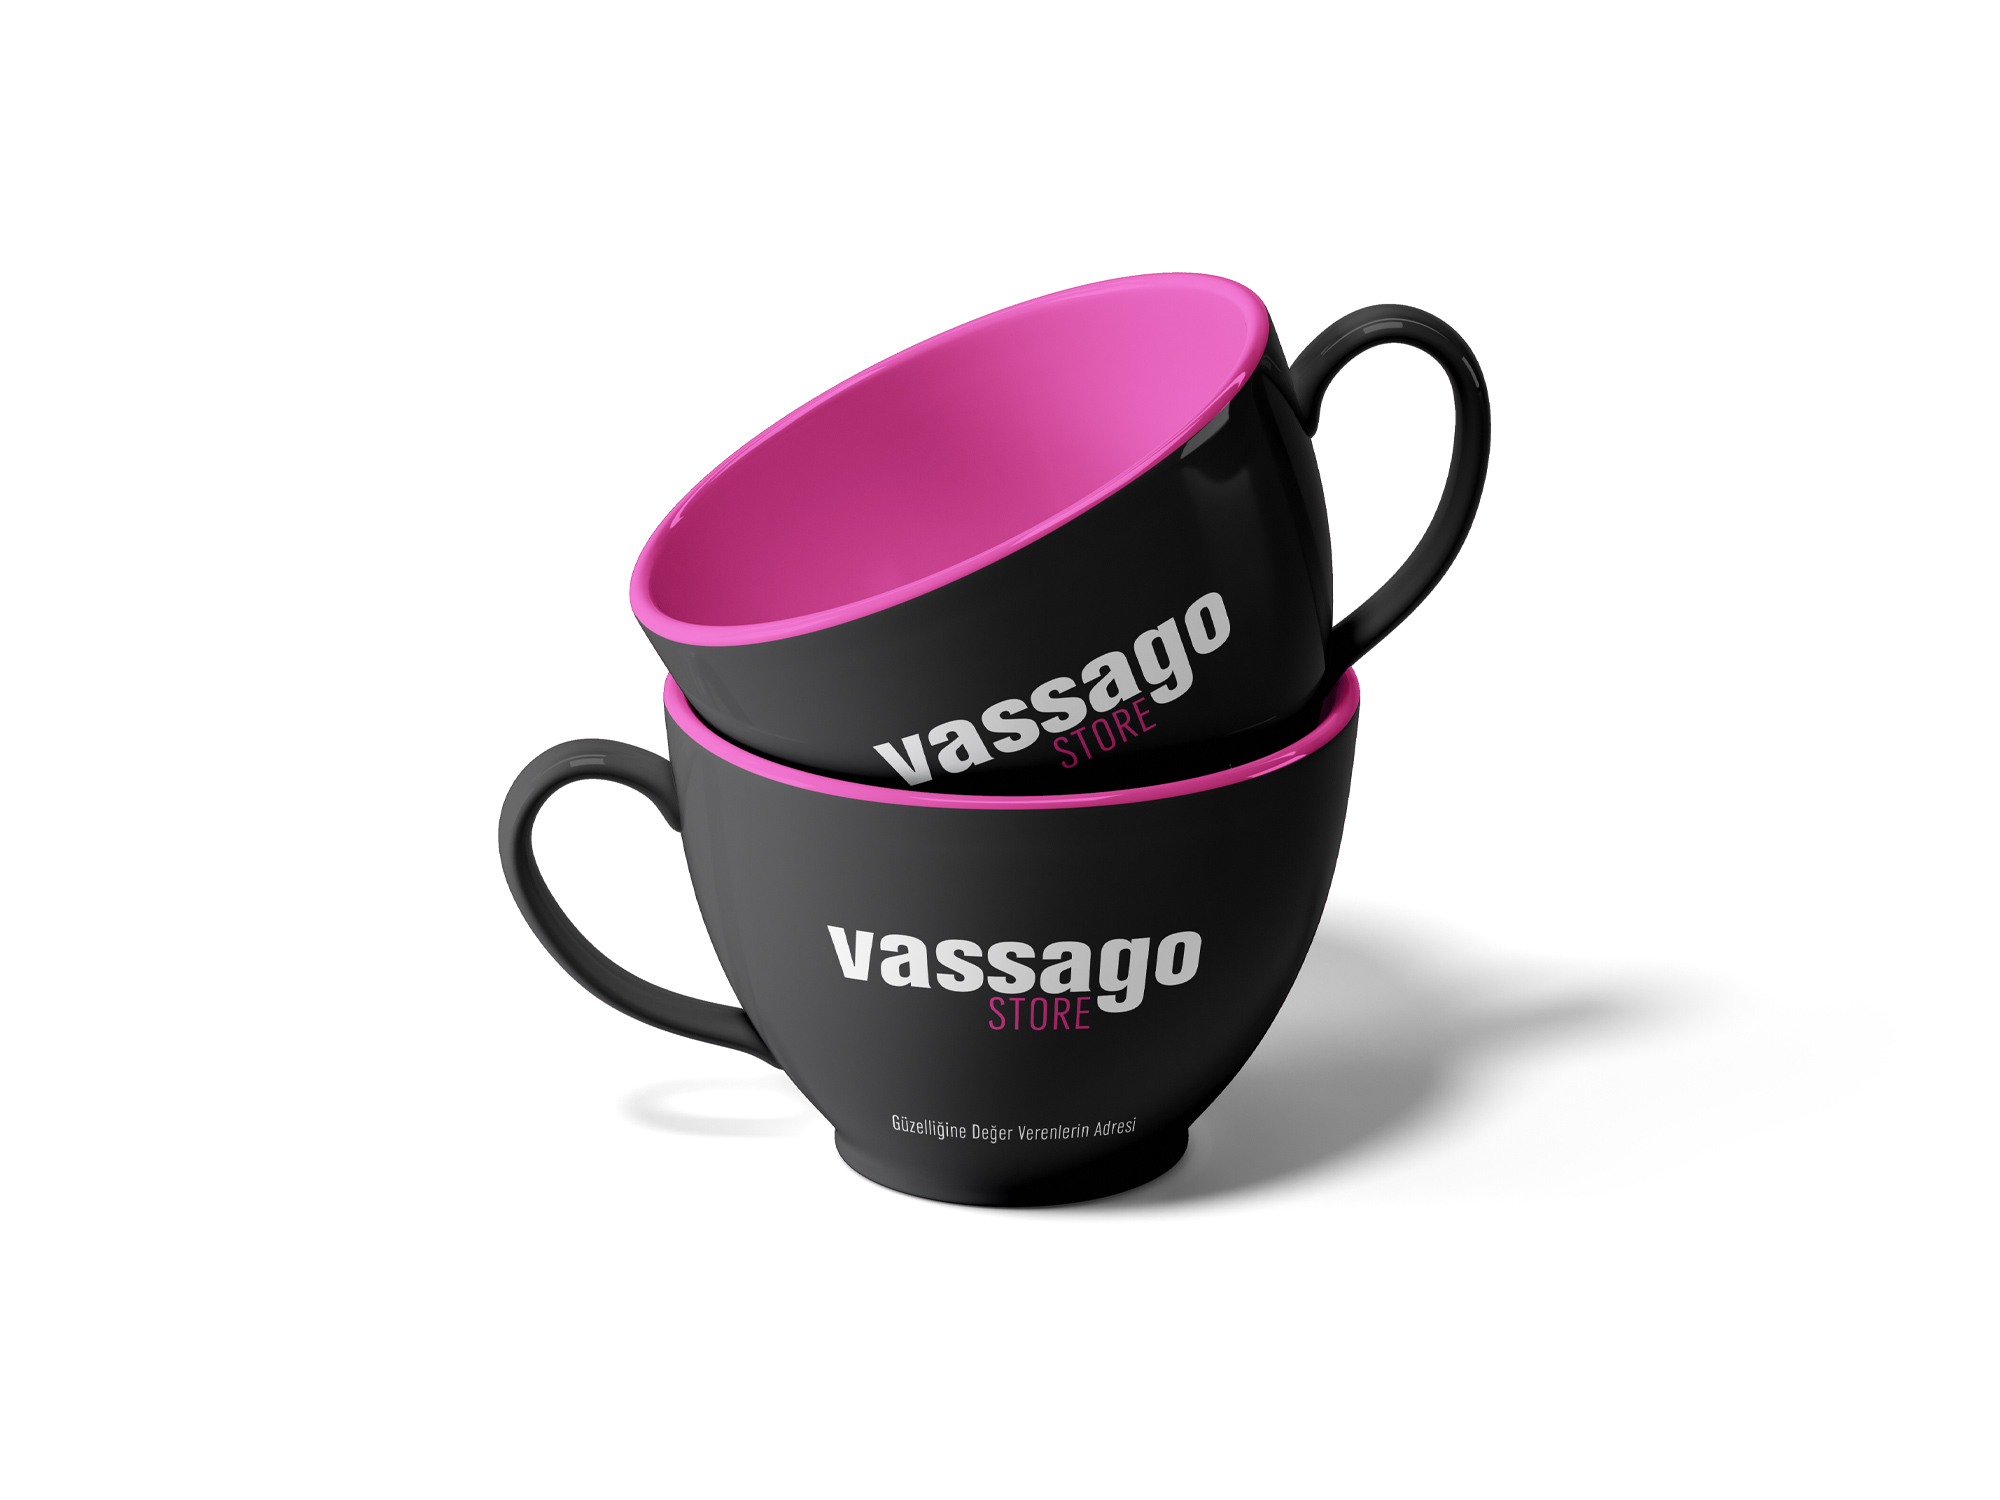 Vassago Store Mug Design